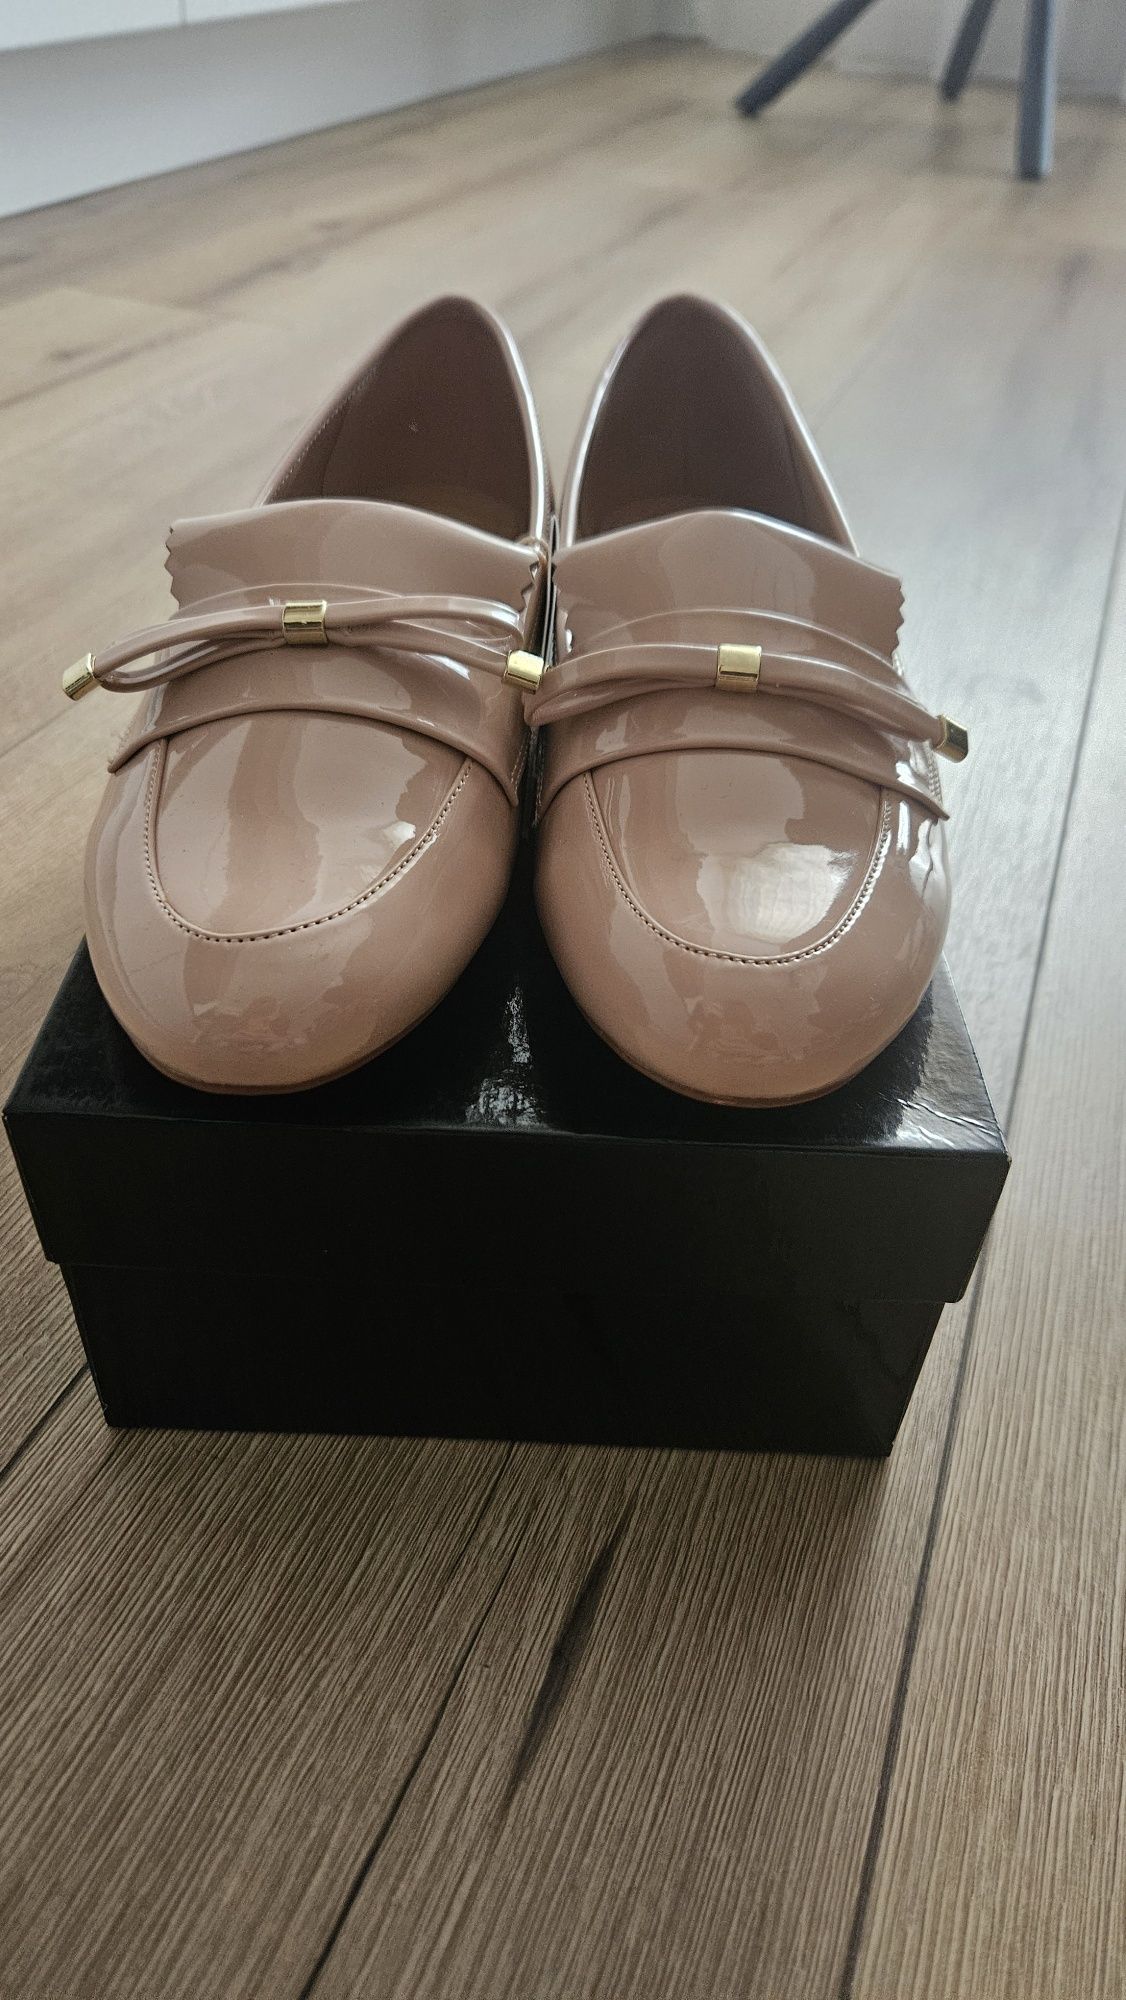 Pantofi/balerini roz marimea 41